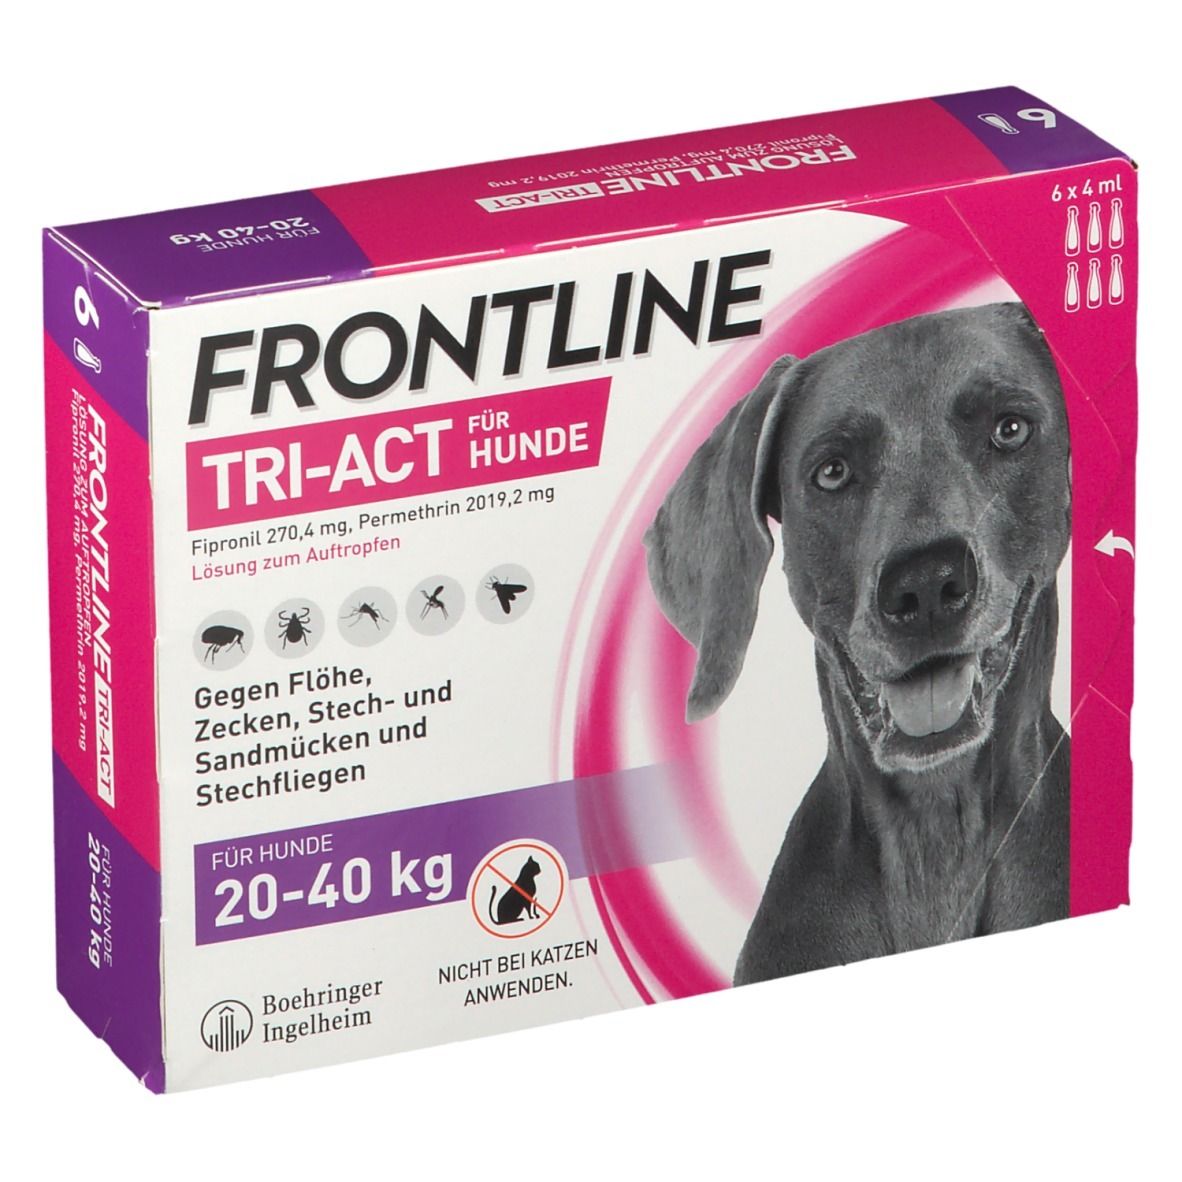 FRONTLINE TRI-ACT Für Hunde 20 - 40 kg